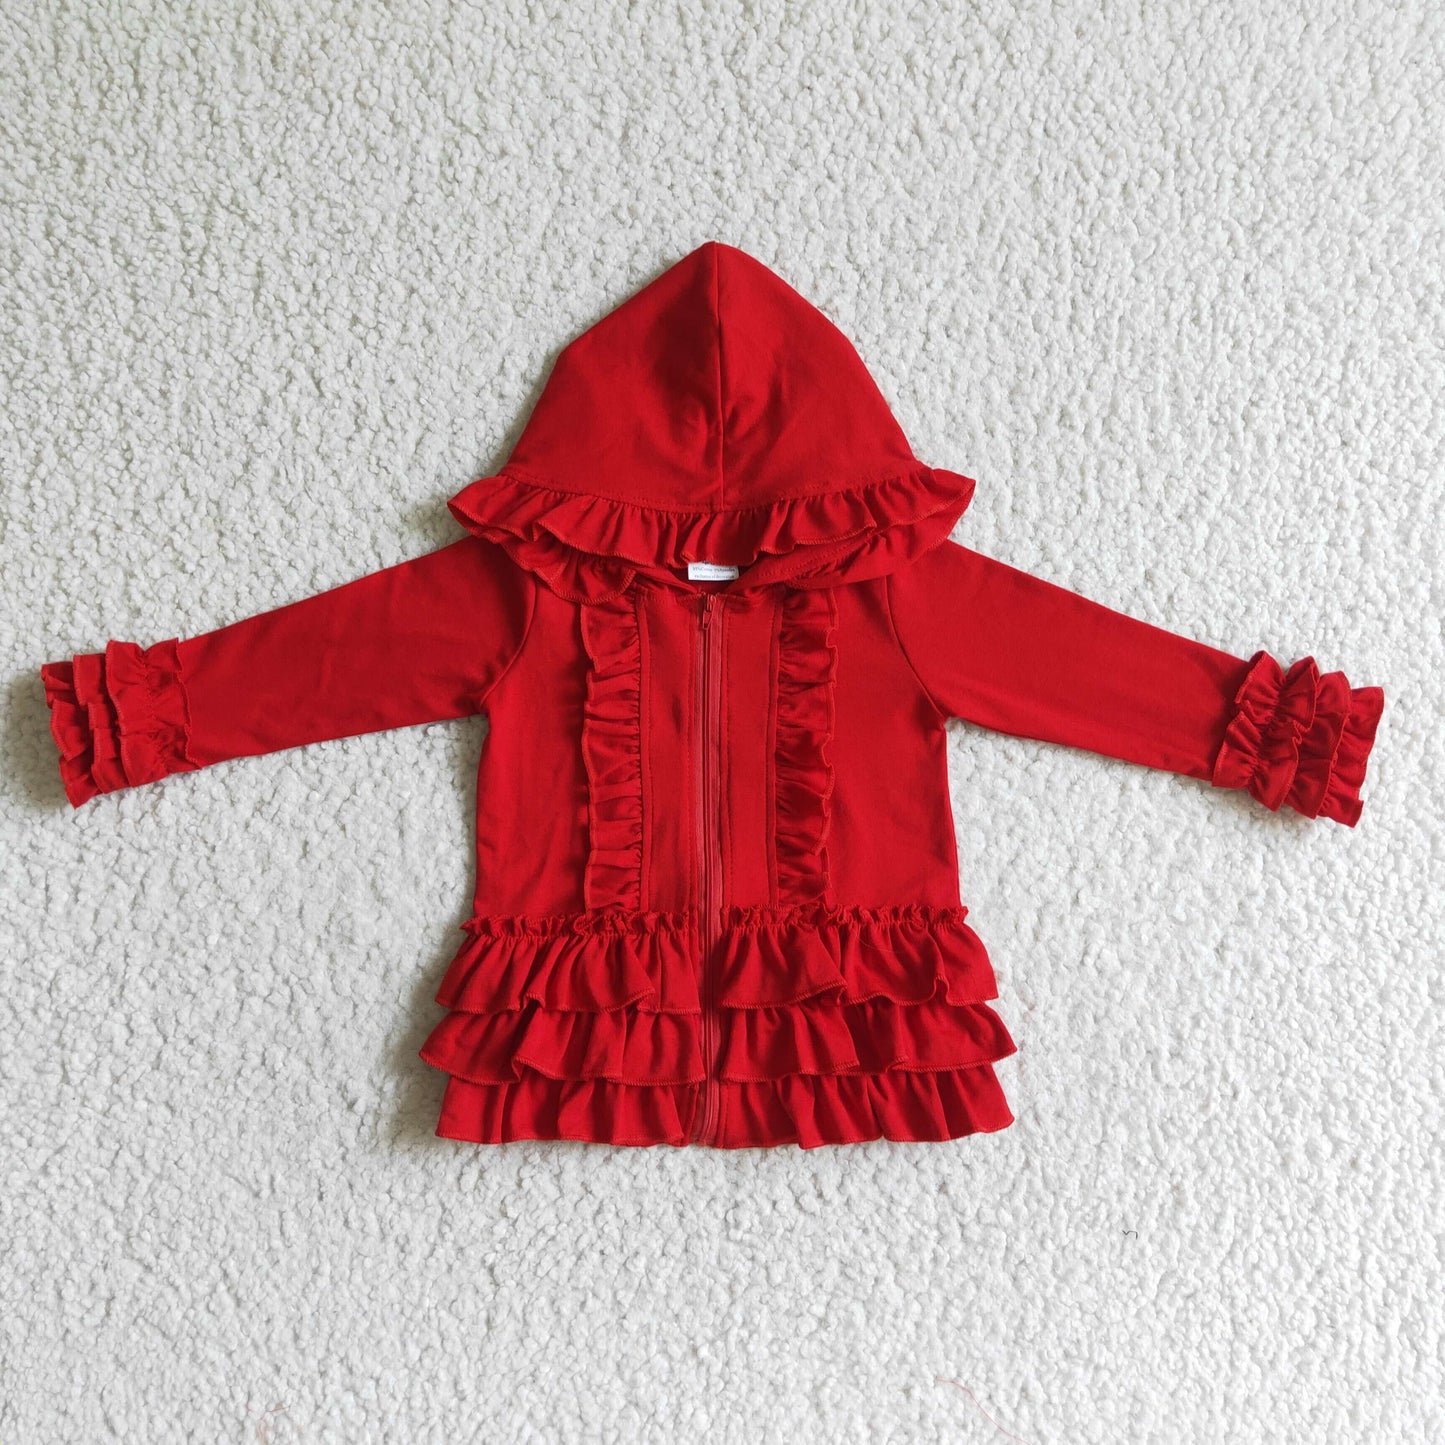 Solid red zipper jacket girls ruffle hoodie cardigan